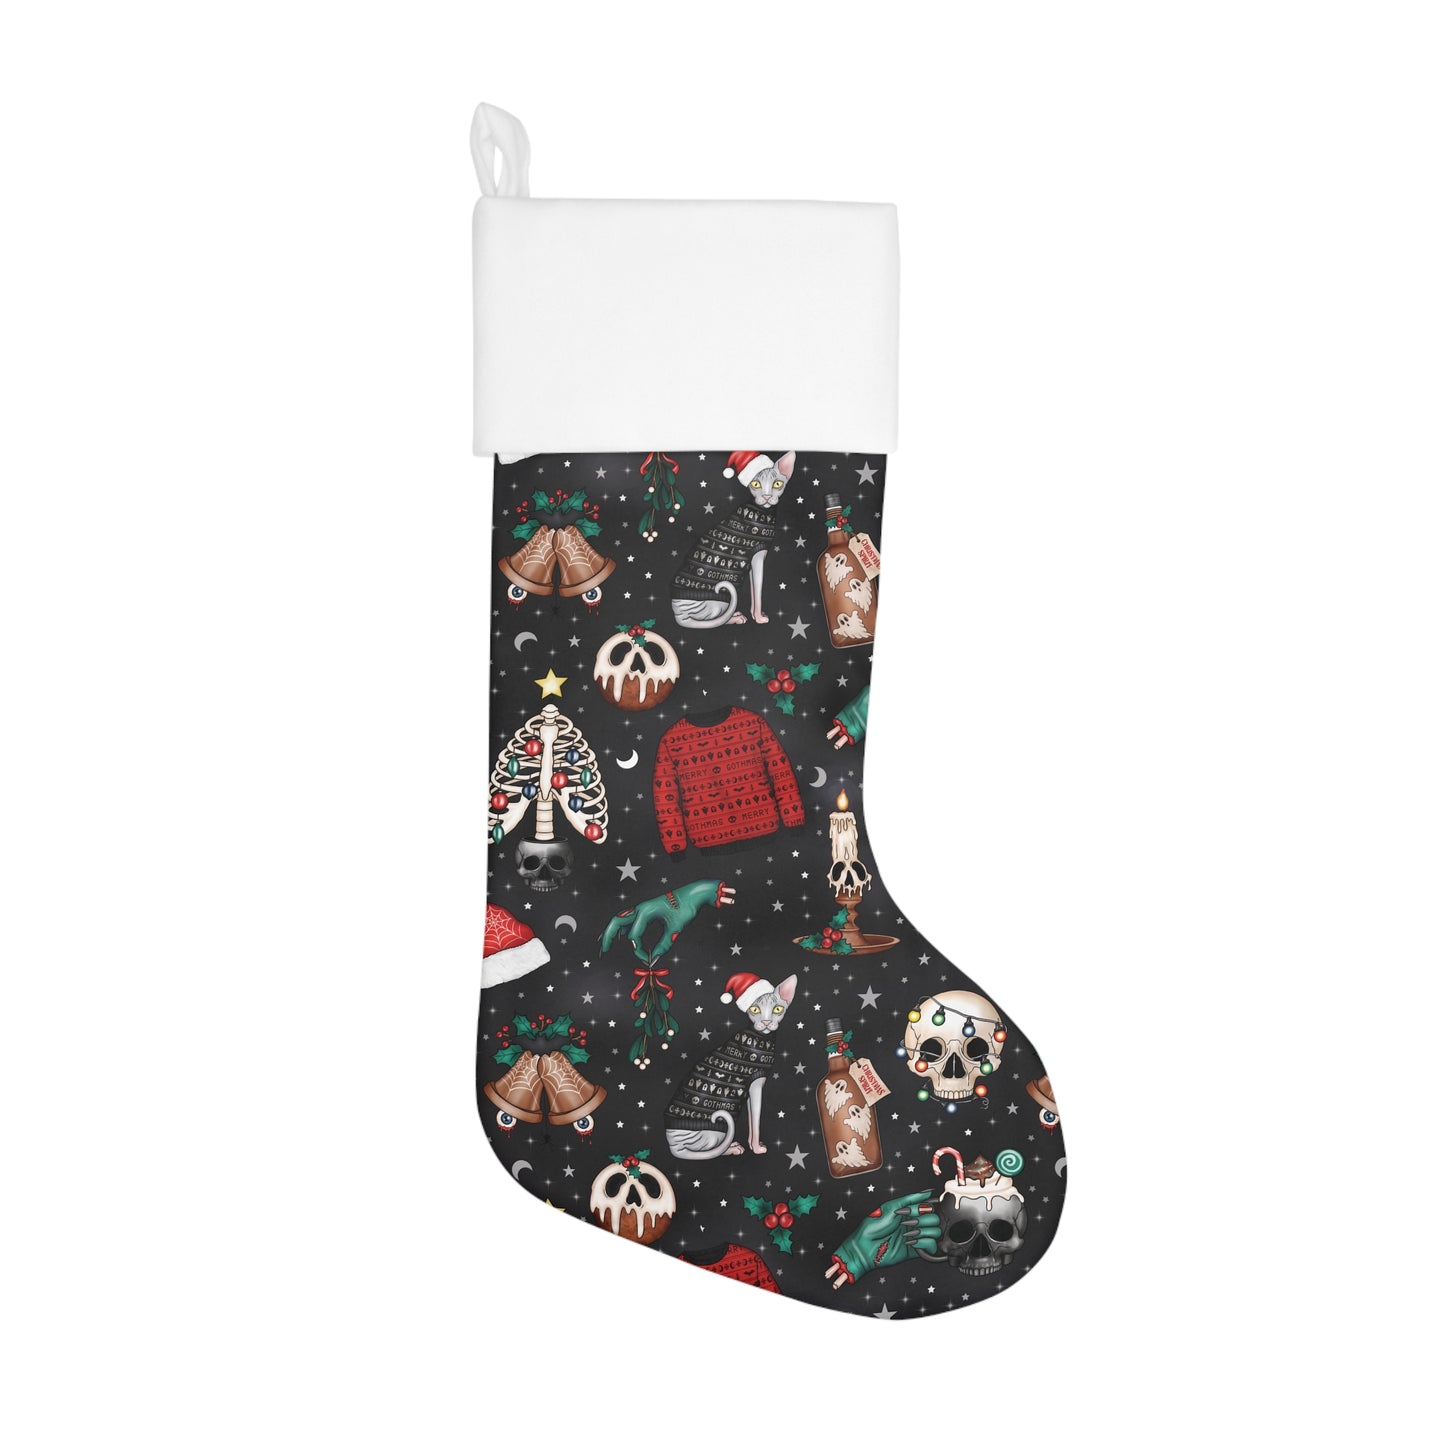 Kitschy Kawaii Goth Christmas, Creepy Cute Whimsigoth Black Creepmas Holiday Stocking